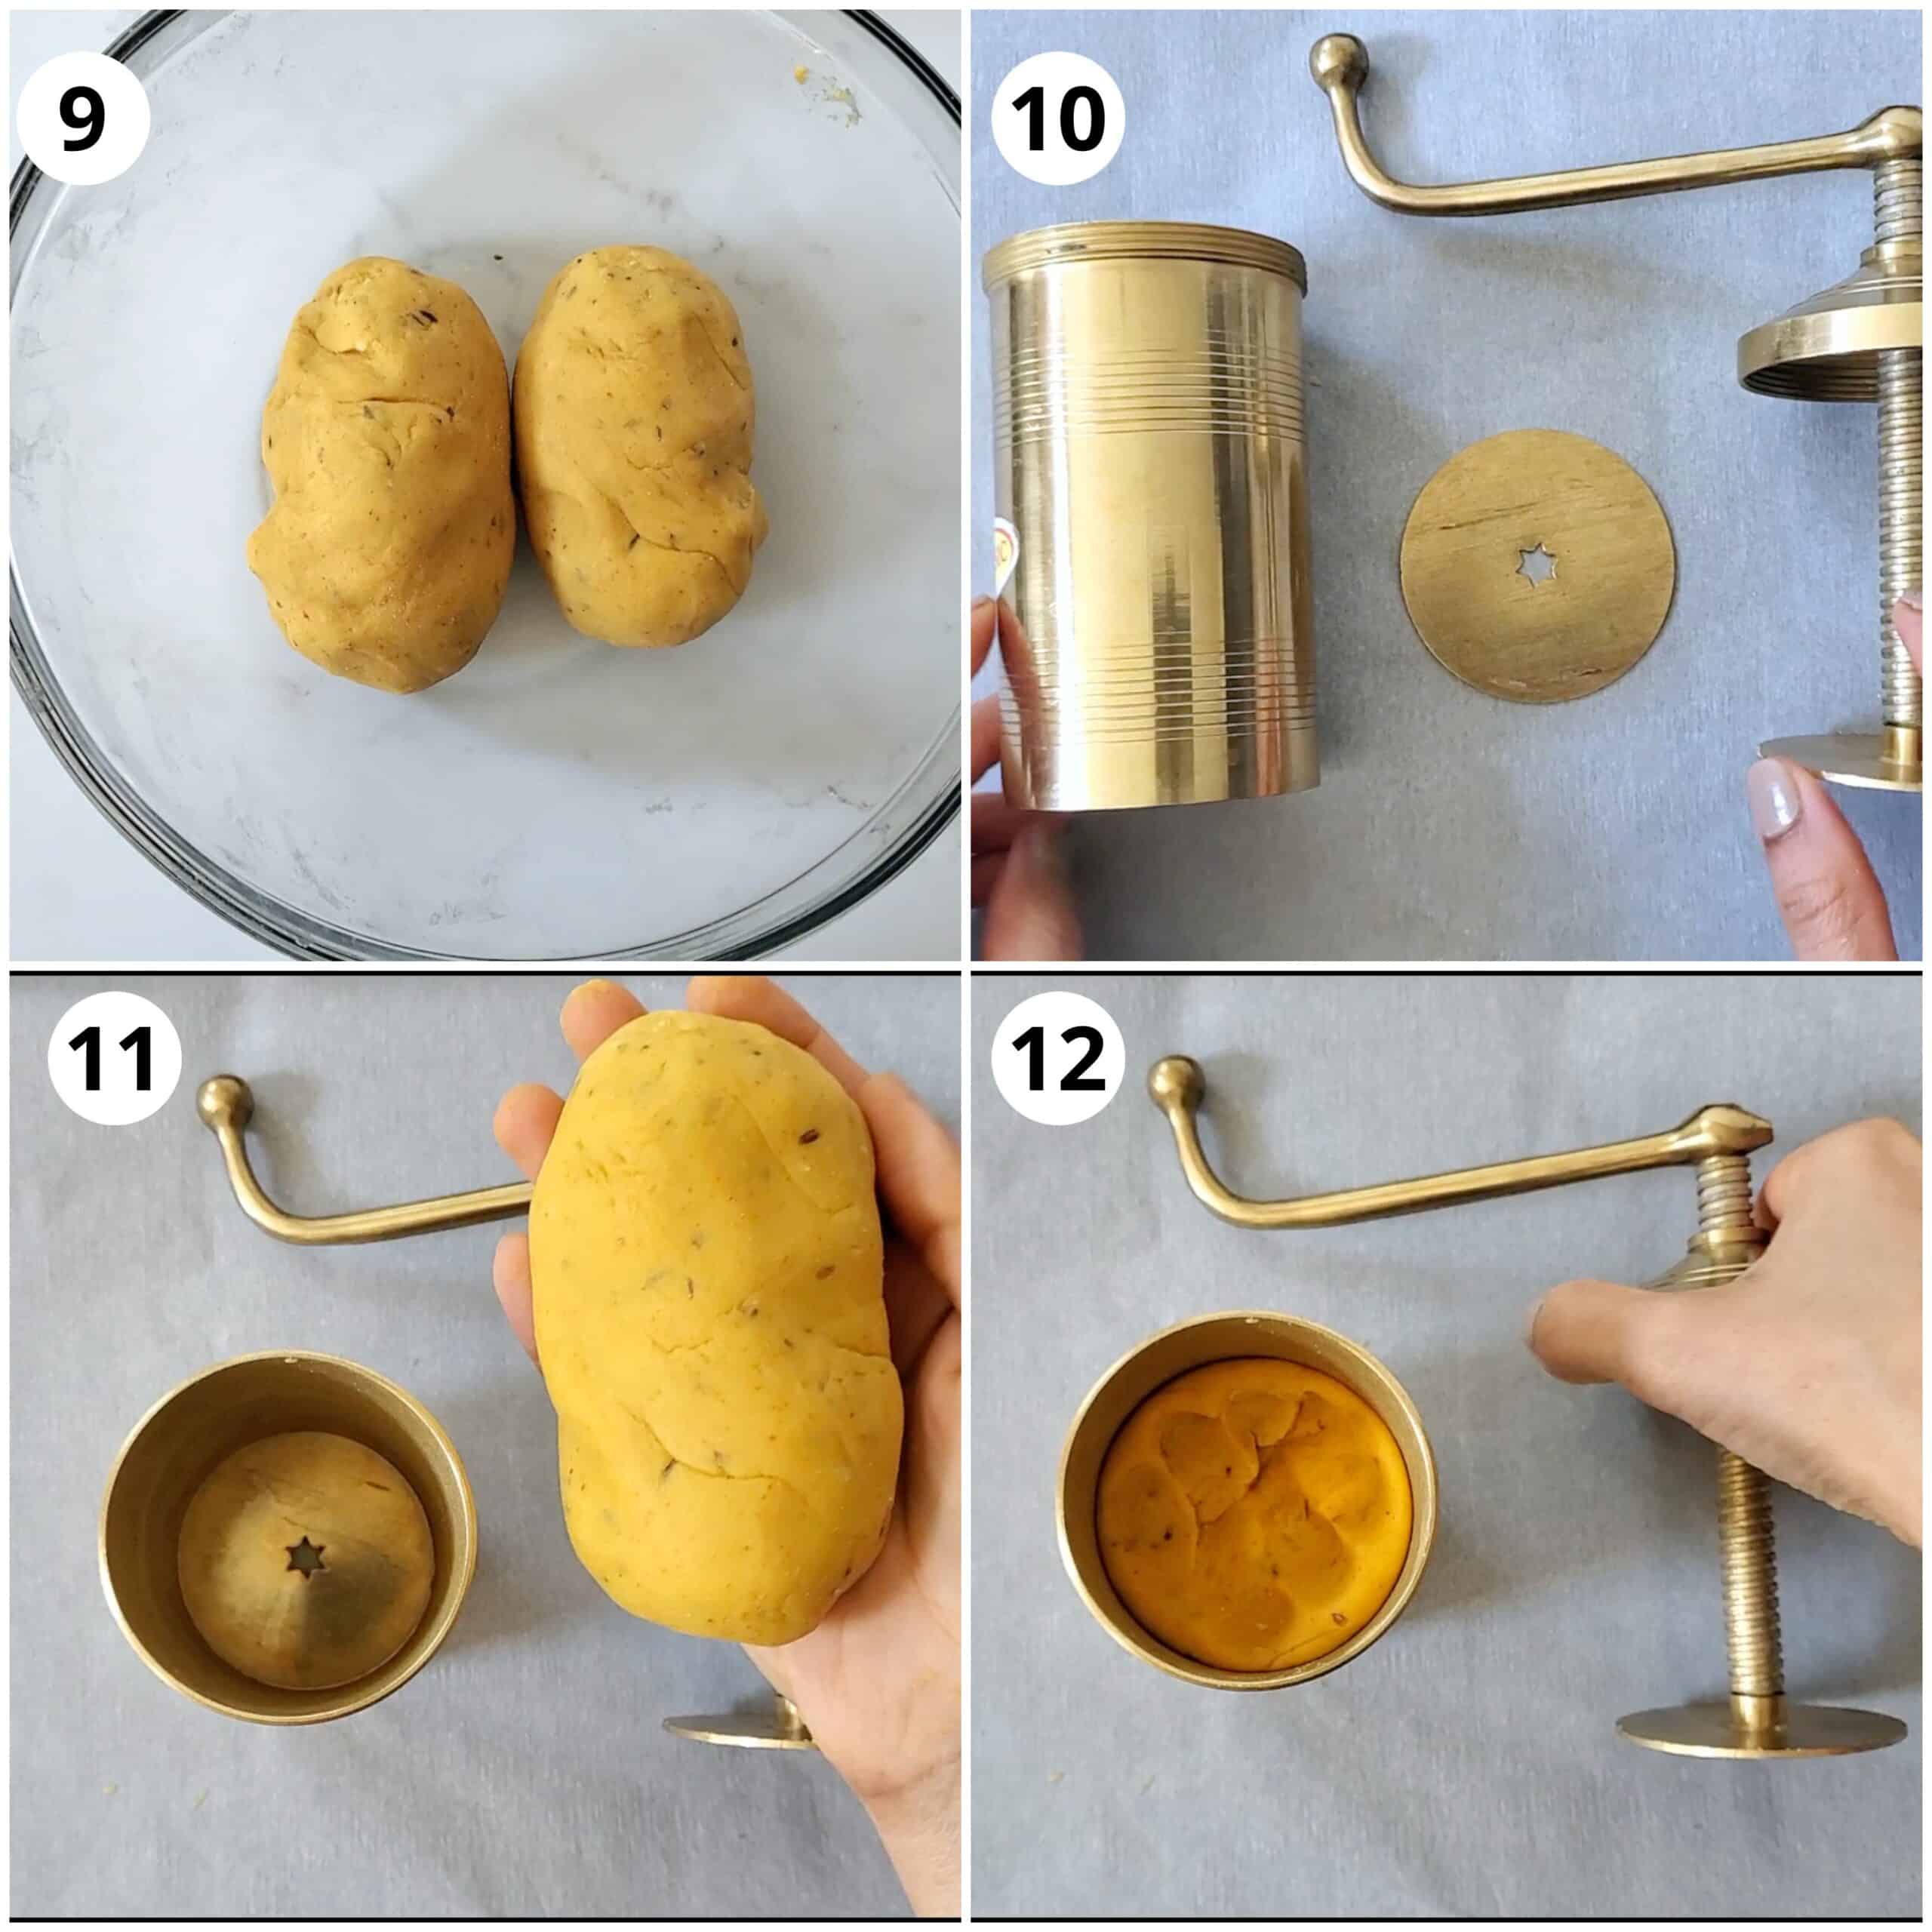 Steps for adding dough to chakli press